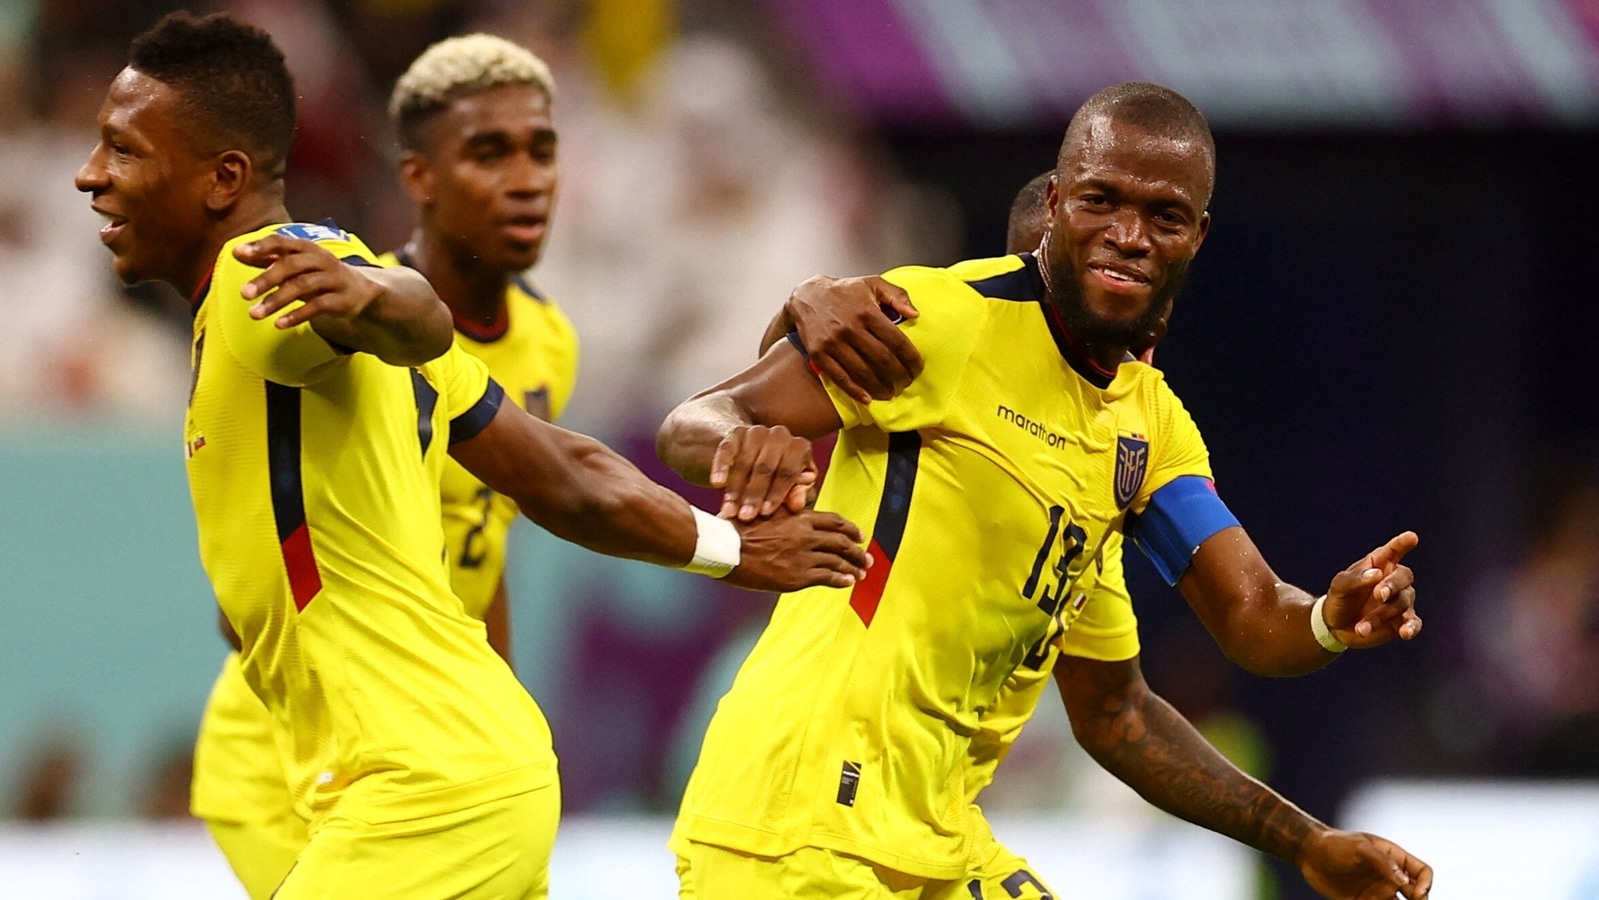 Watch: Ecuador’s Enner Valencia scores first goal of FIFA World Cup 2022 against hosts Qatar at Al Bayt Stadium